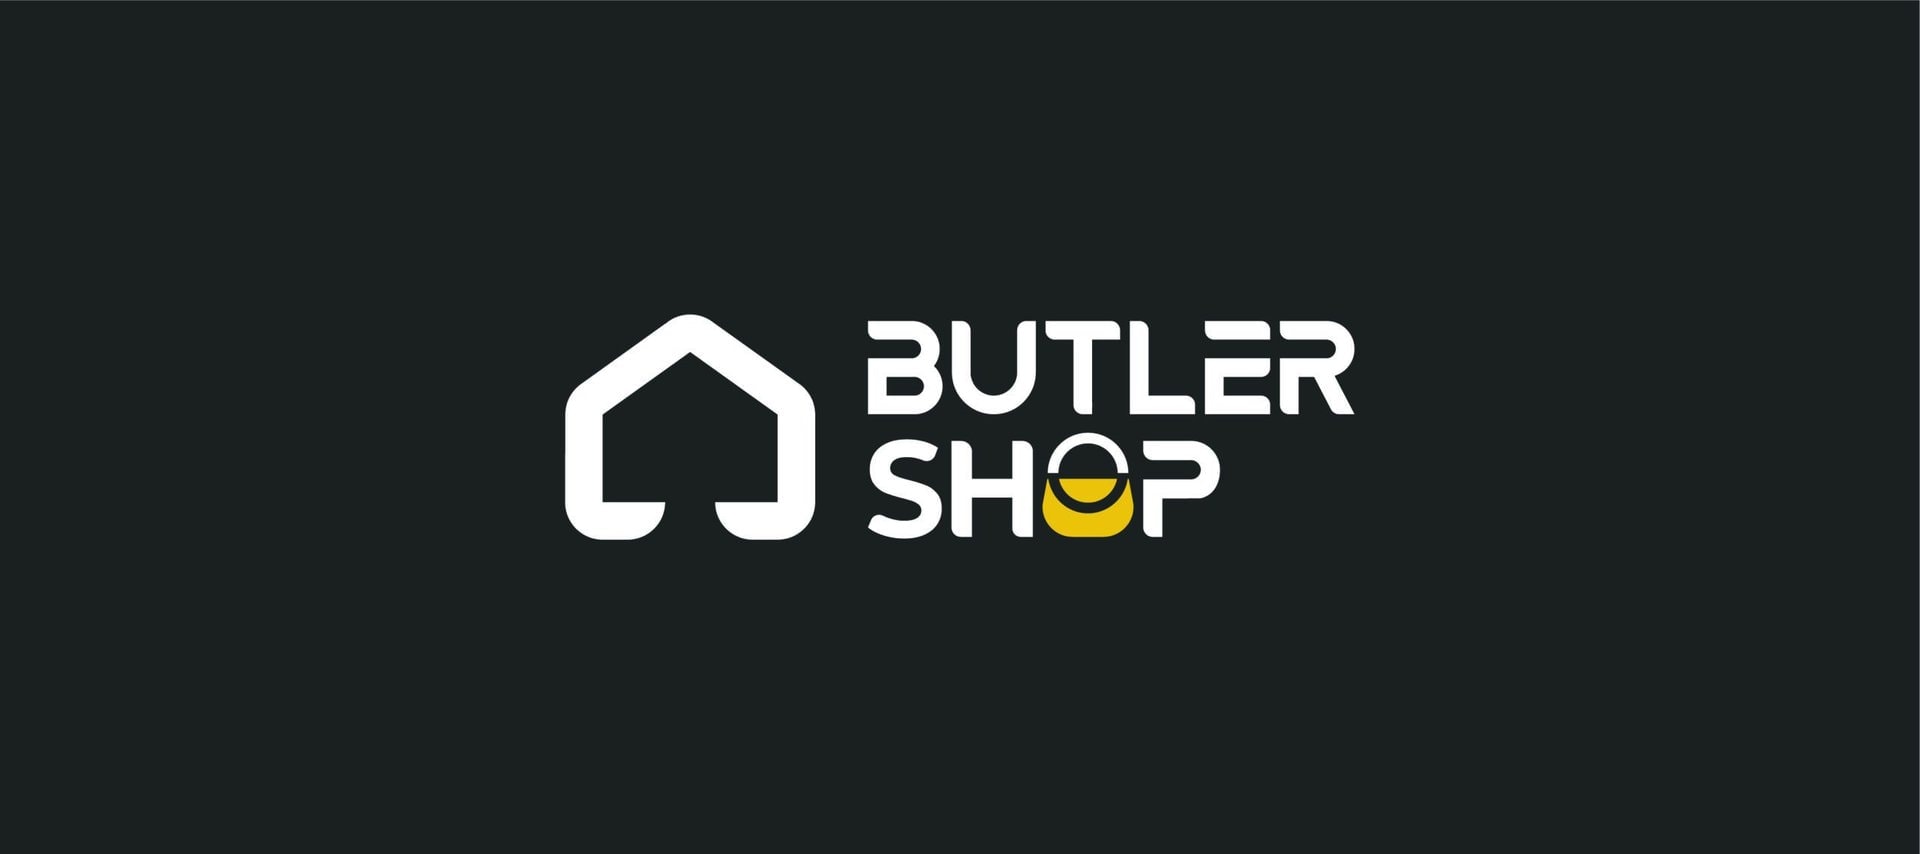 BUTLER Shop in Singapore